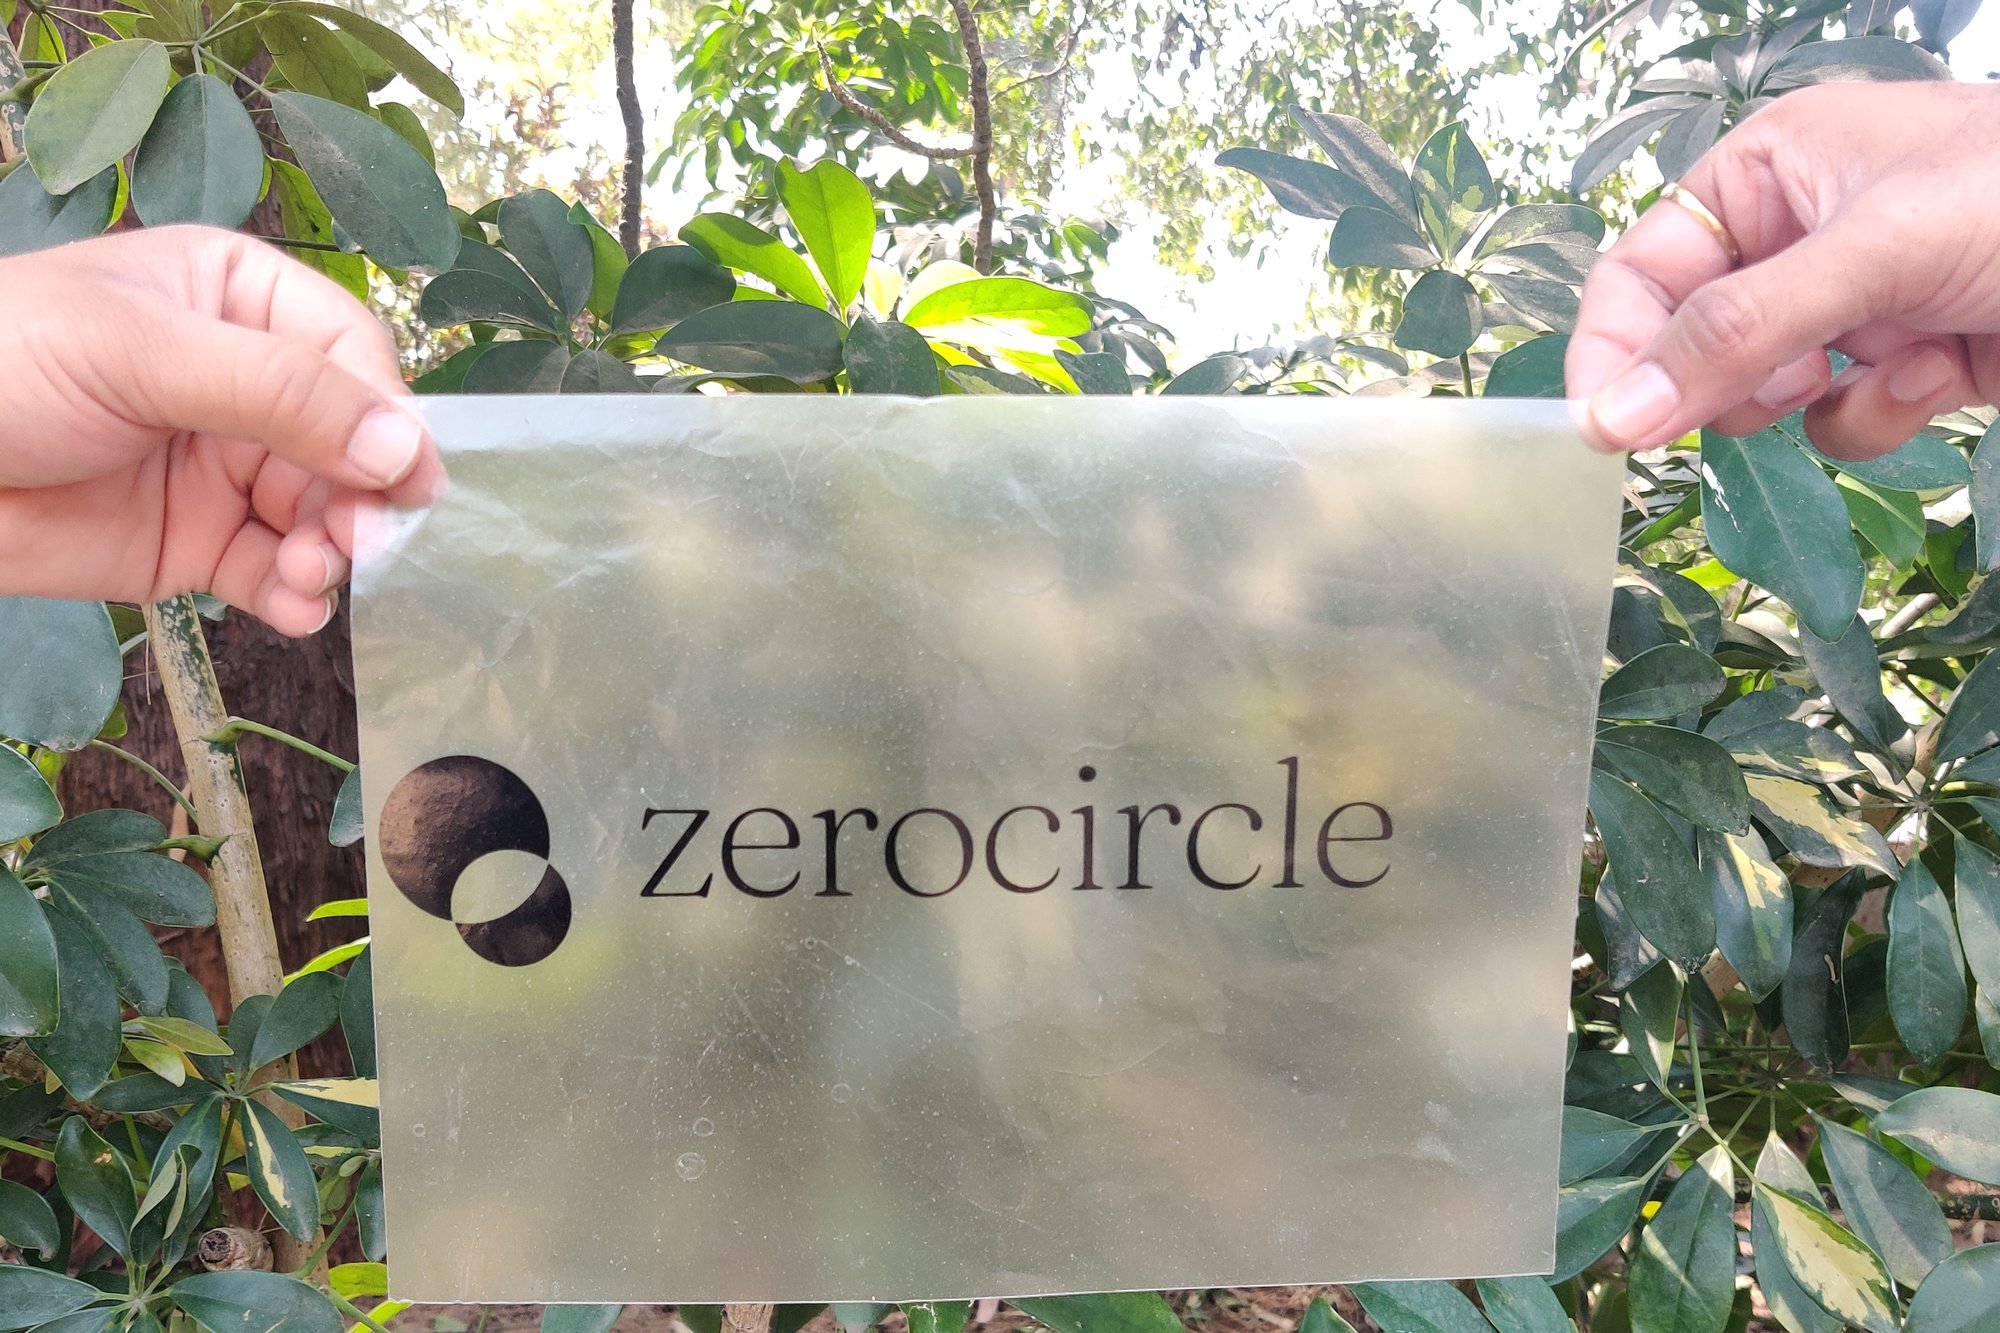 Zerocircle